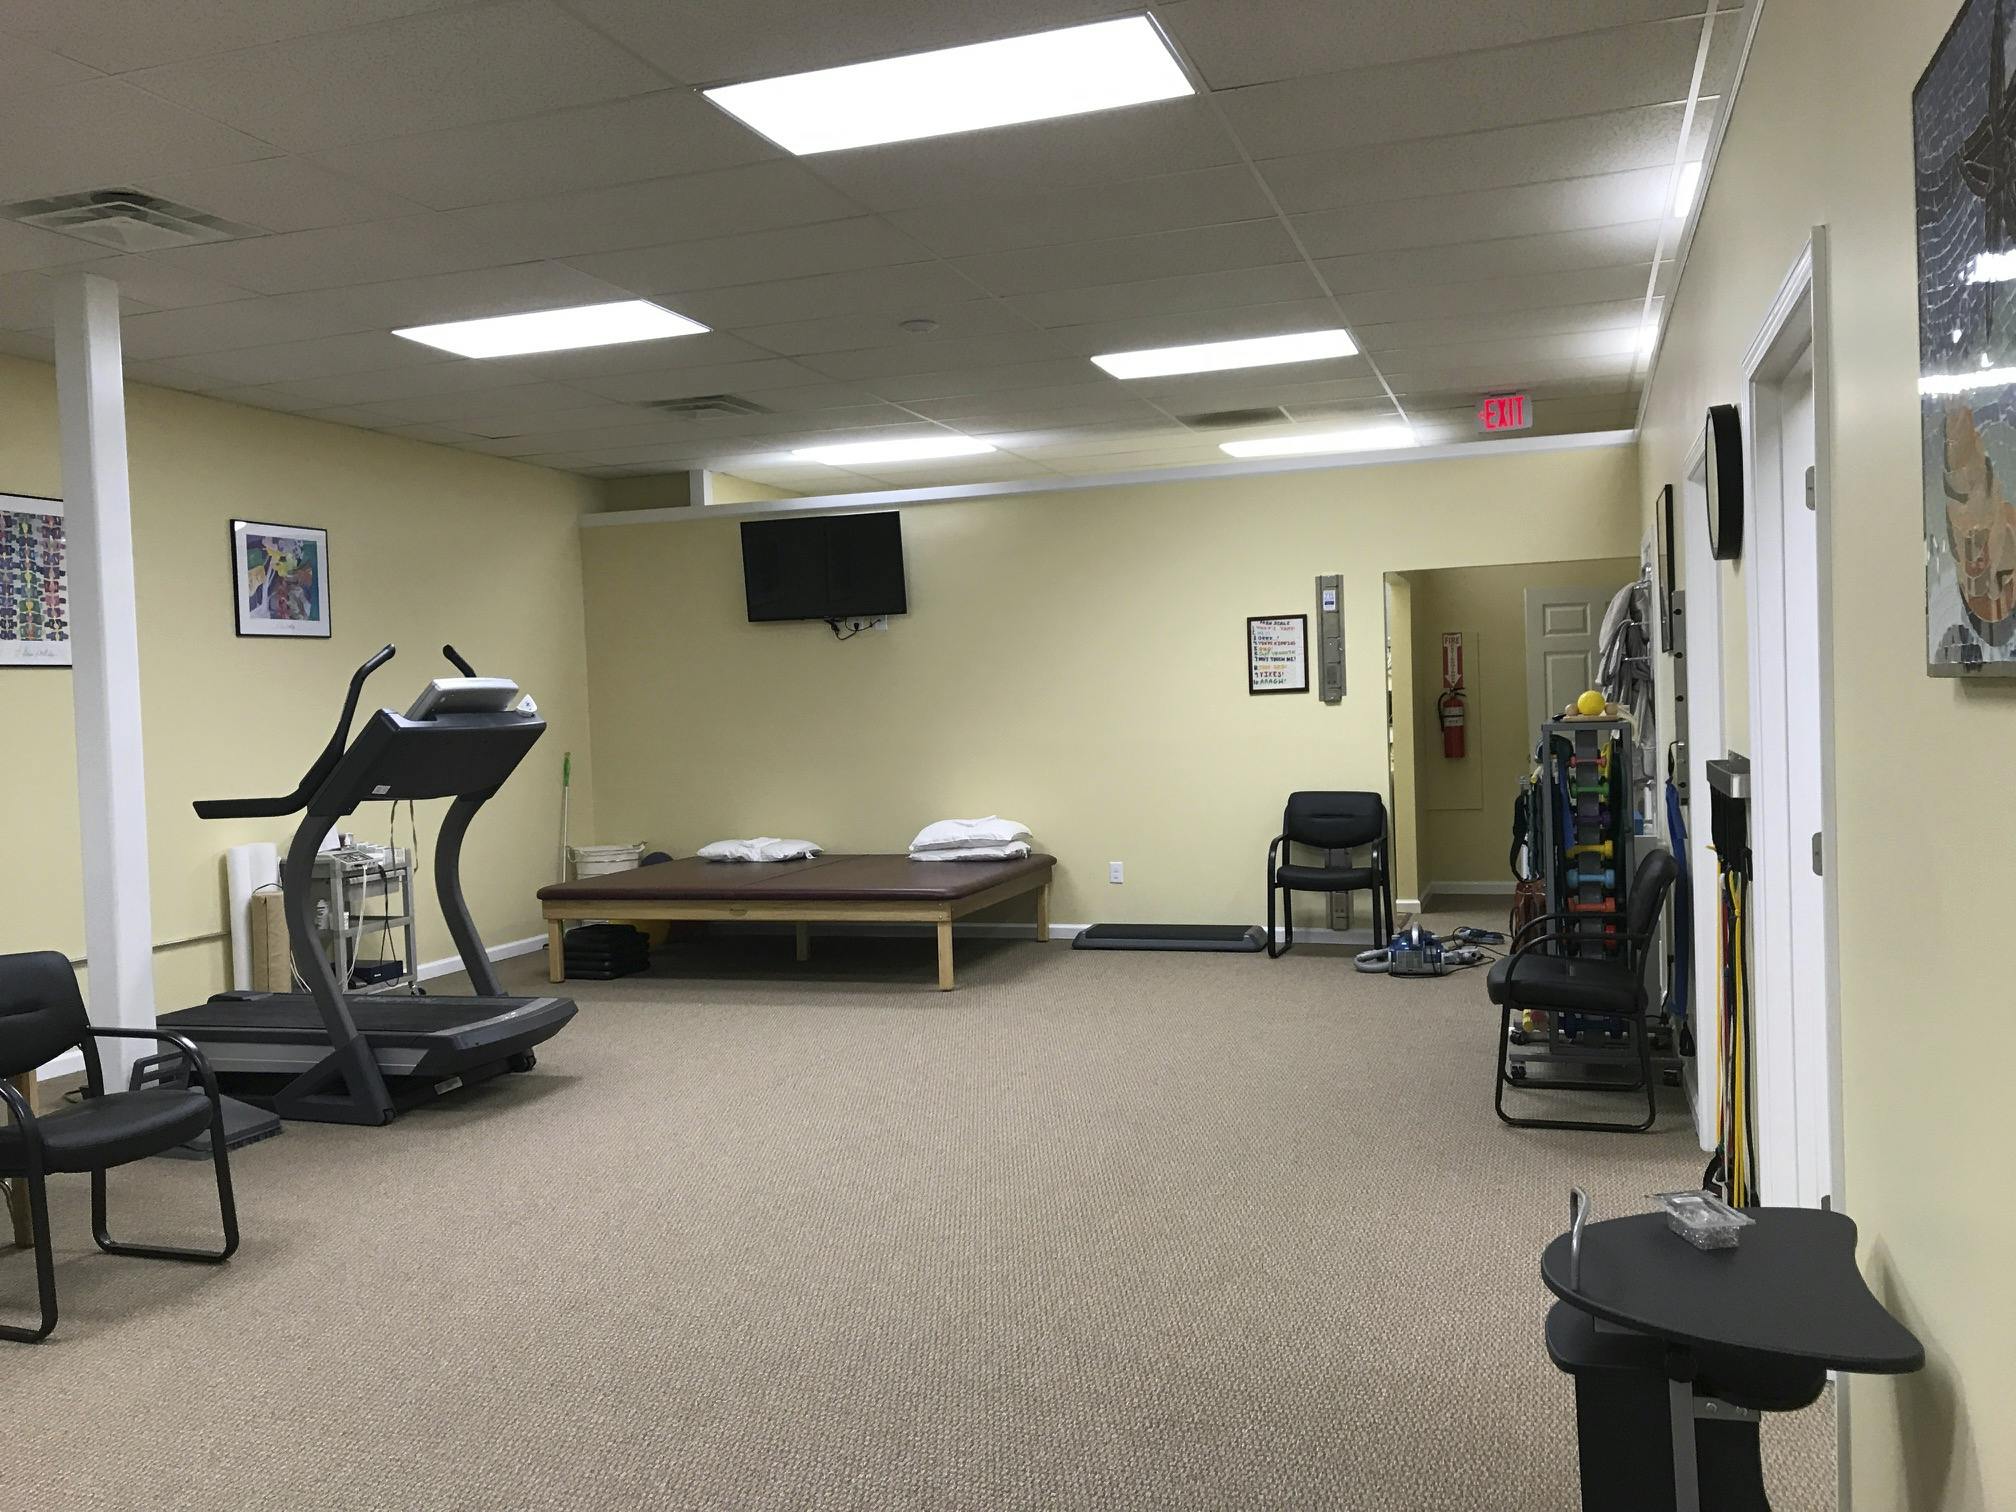 Professional Rehabilitation Services | Physical Therapy | Prince Creek Publix Village Shops | Murrells Inlet SC